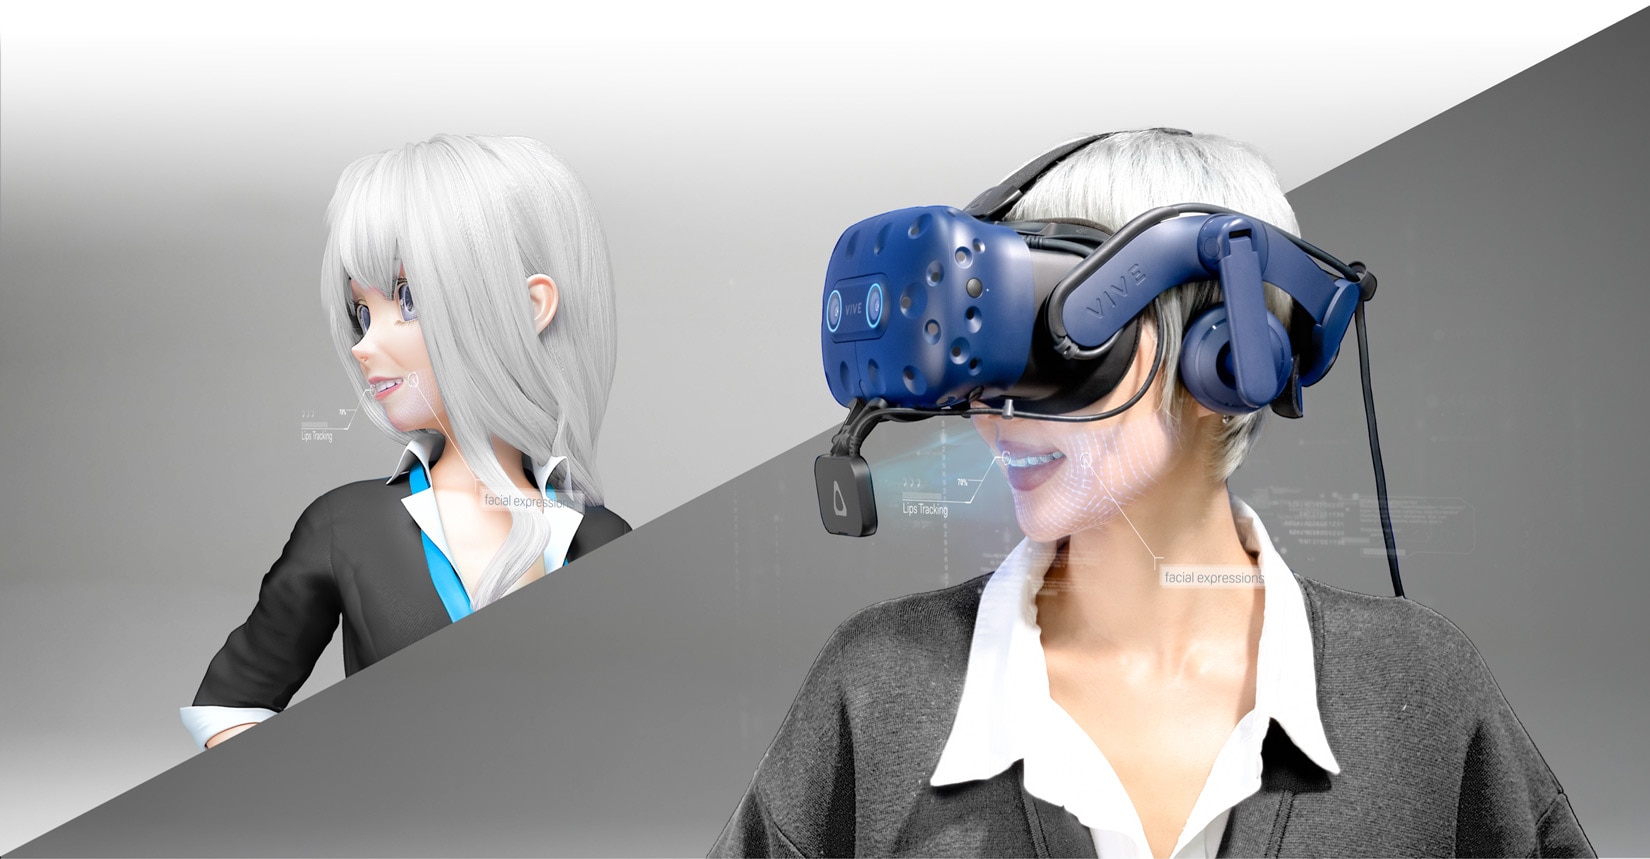 VR facial tracking